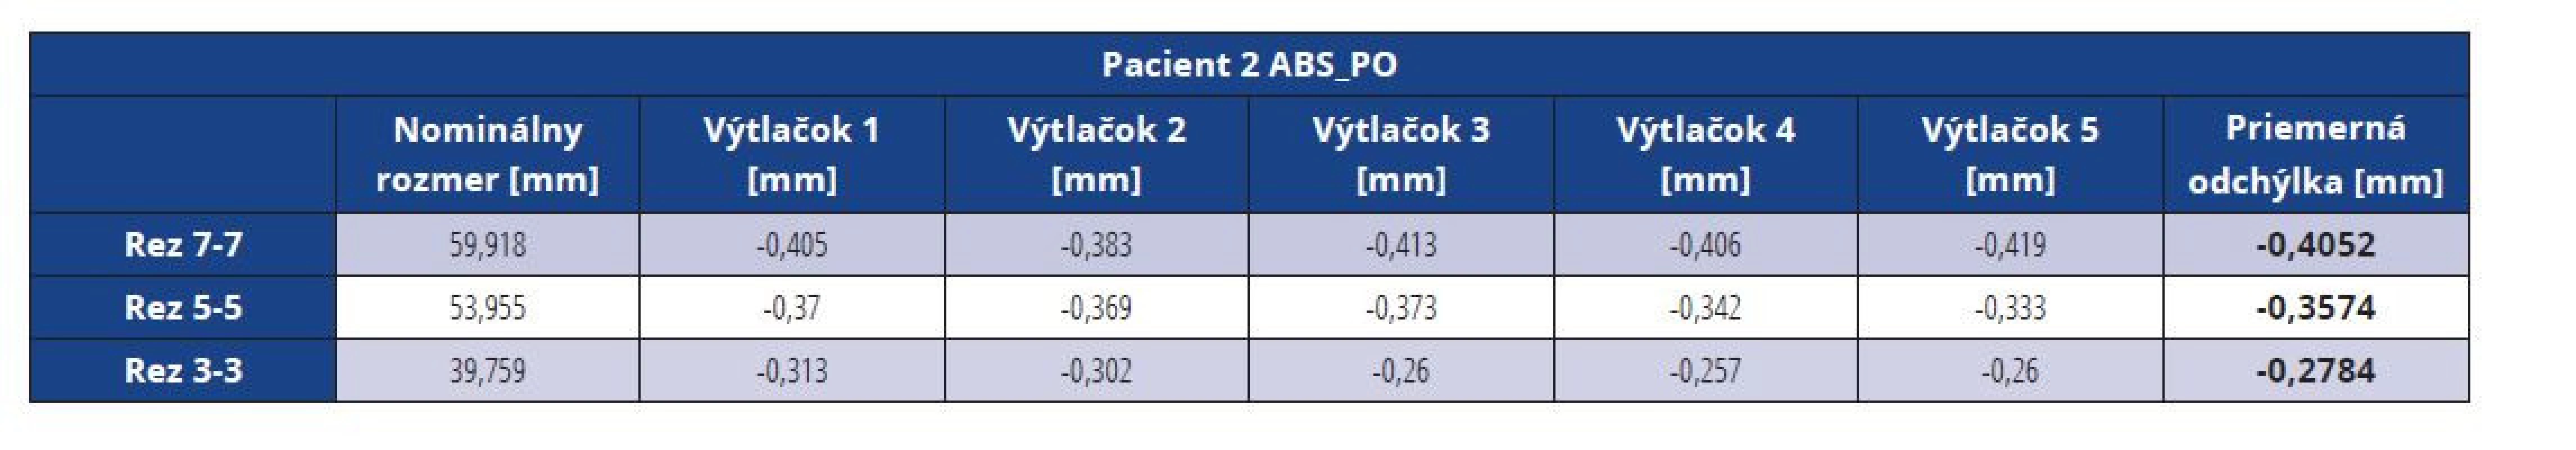 Rozmerové odchýlky master modelu pacienta 2 vytlačeného z materiálu ABS po vákuovaní<br>
Tab. 8 Dimensional deviations of the ABS master model after vacuuming (patient 2)